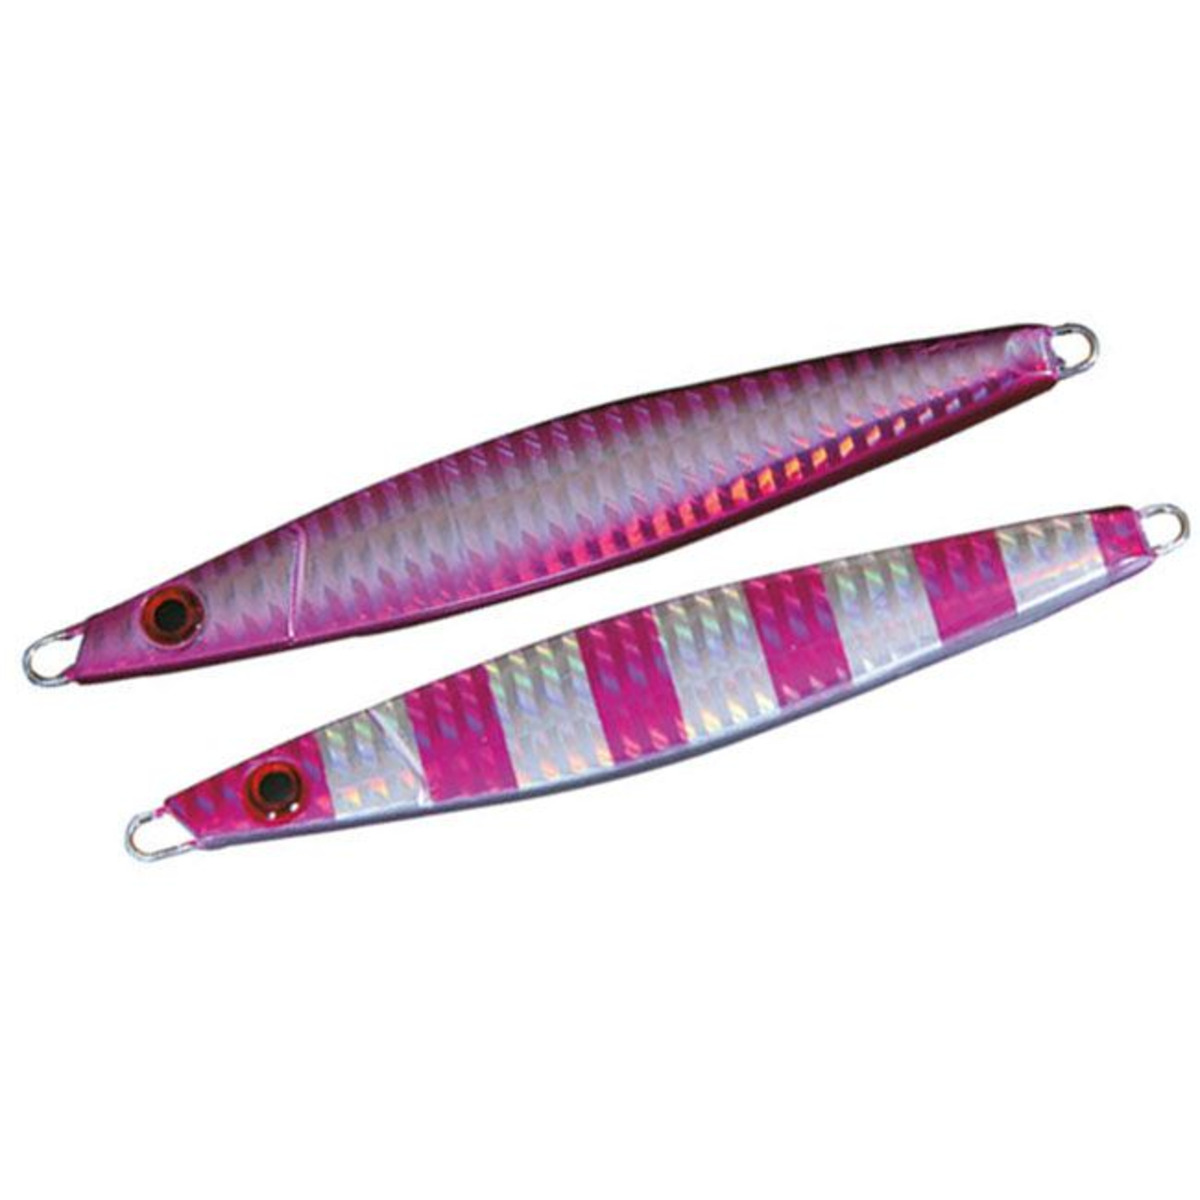 Nomura Sato Single Hook - 60 g - 11.0 cm - Chrome Pink Stripes